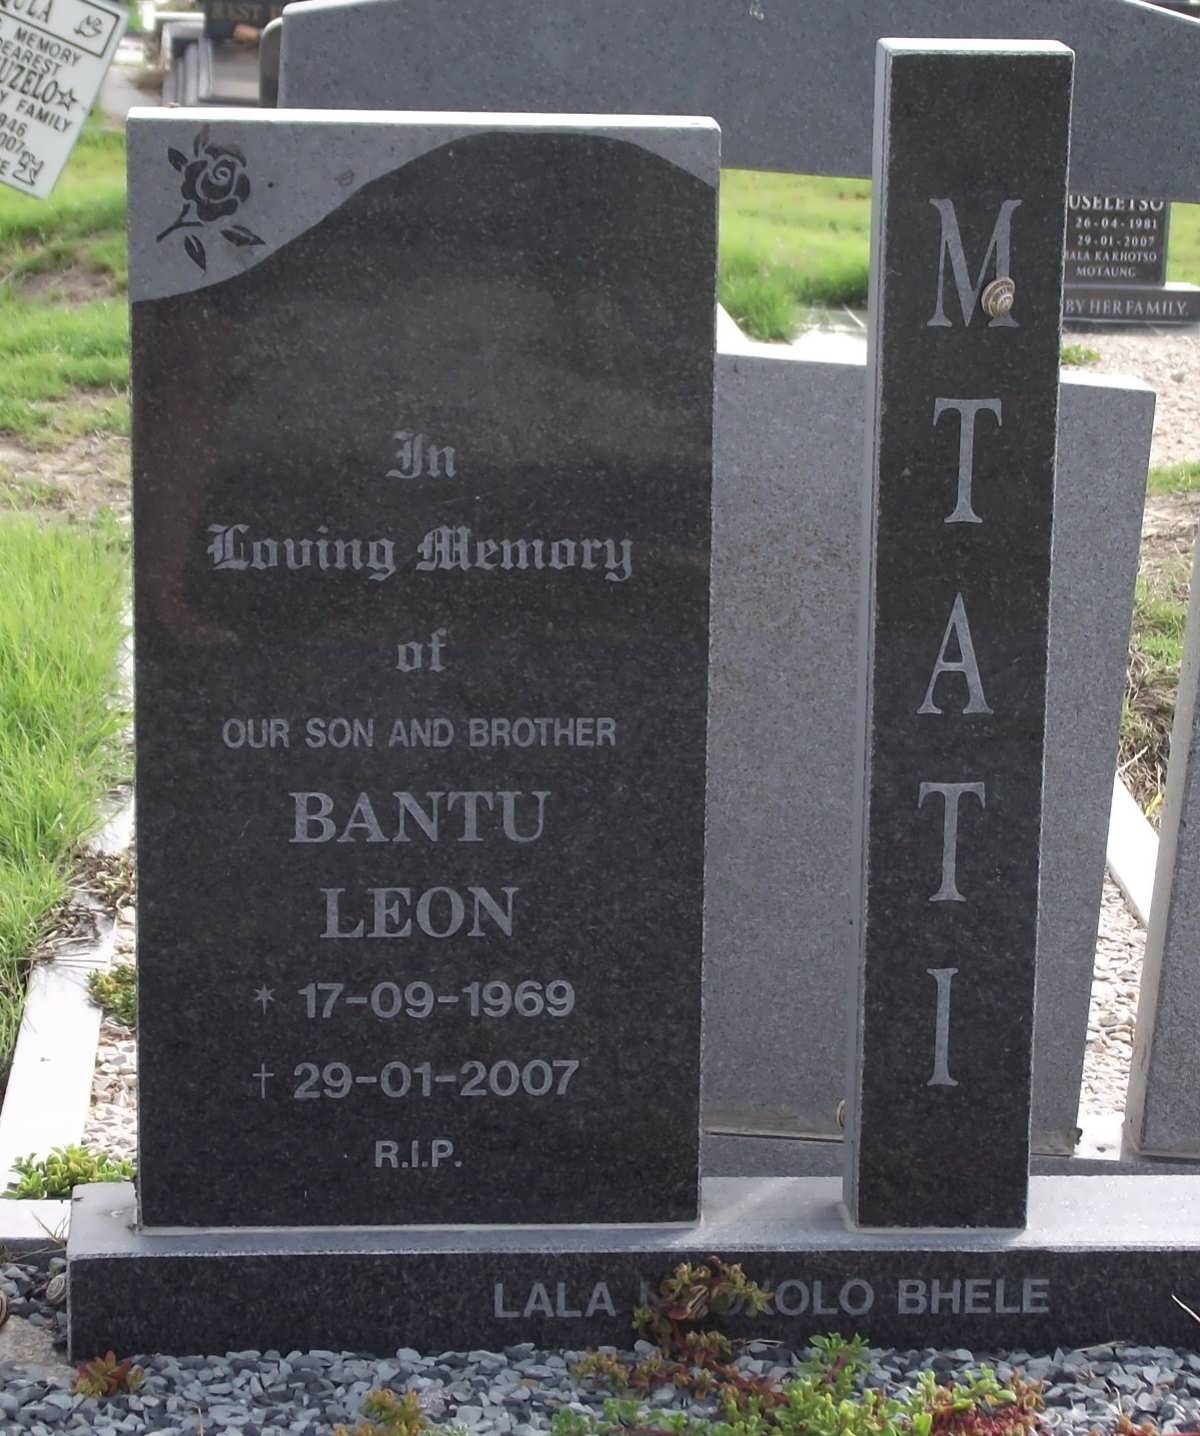 MTATI Bantu Leon 1969-2007